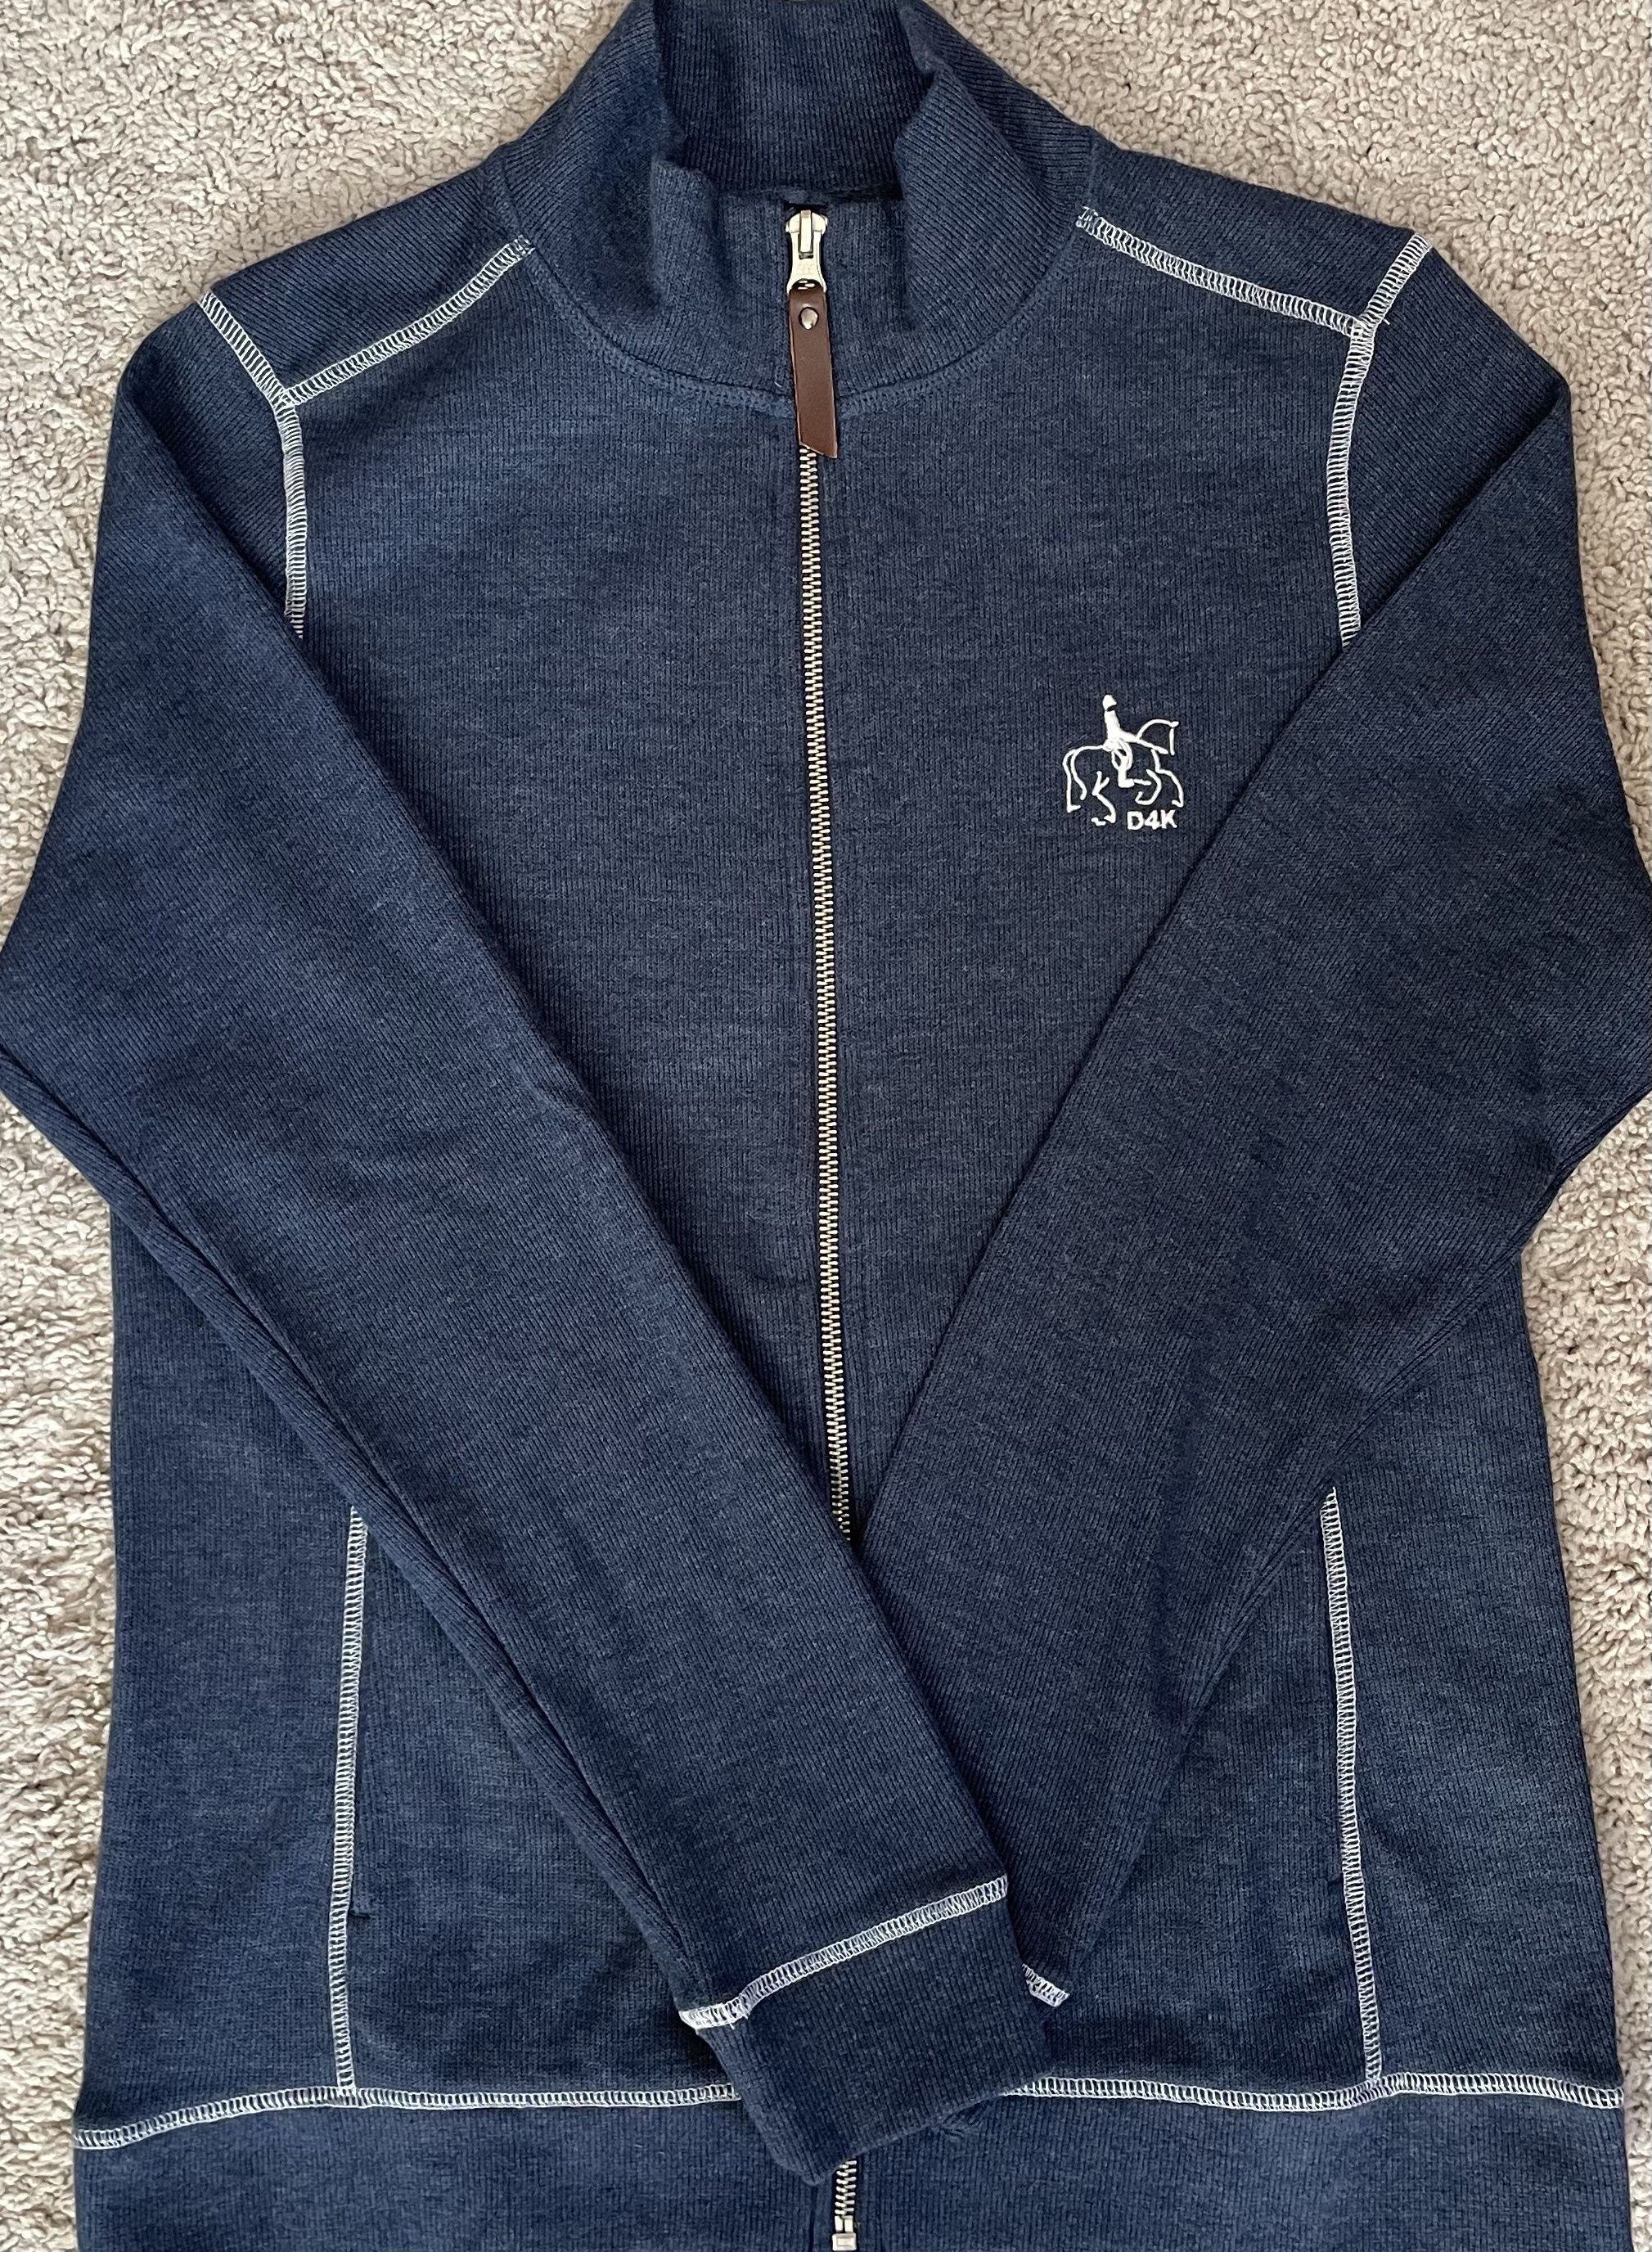 D4K Rib Jacket - $39 - Ladies XS, Ladies M, Ladies L - Click for Details